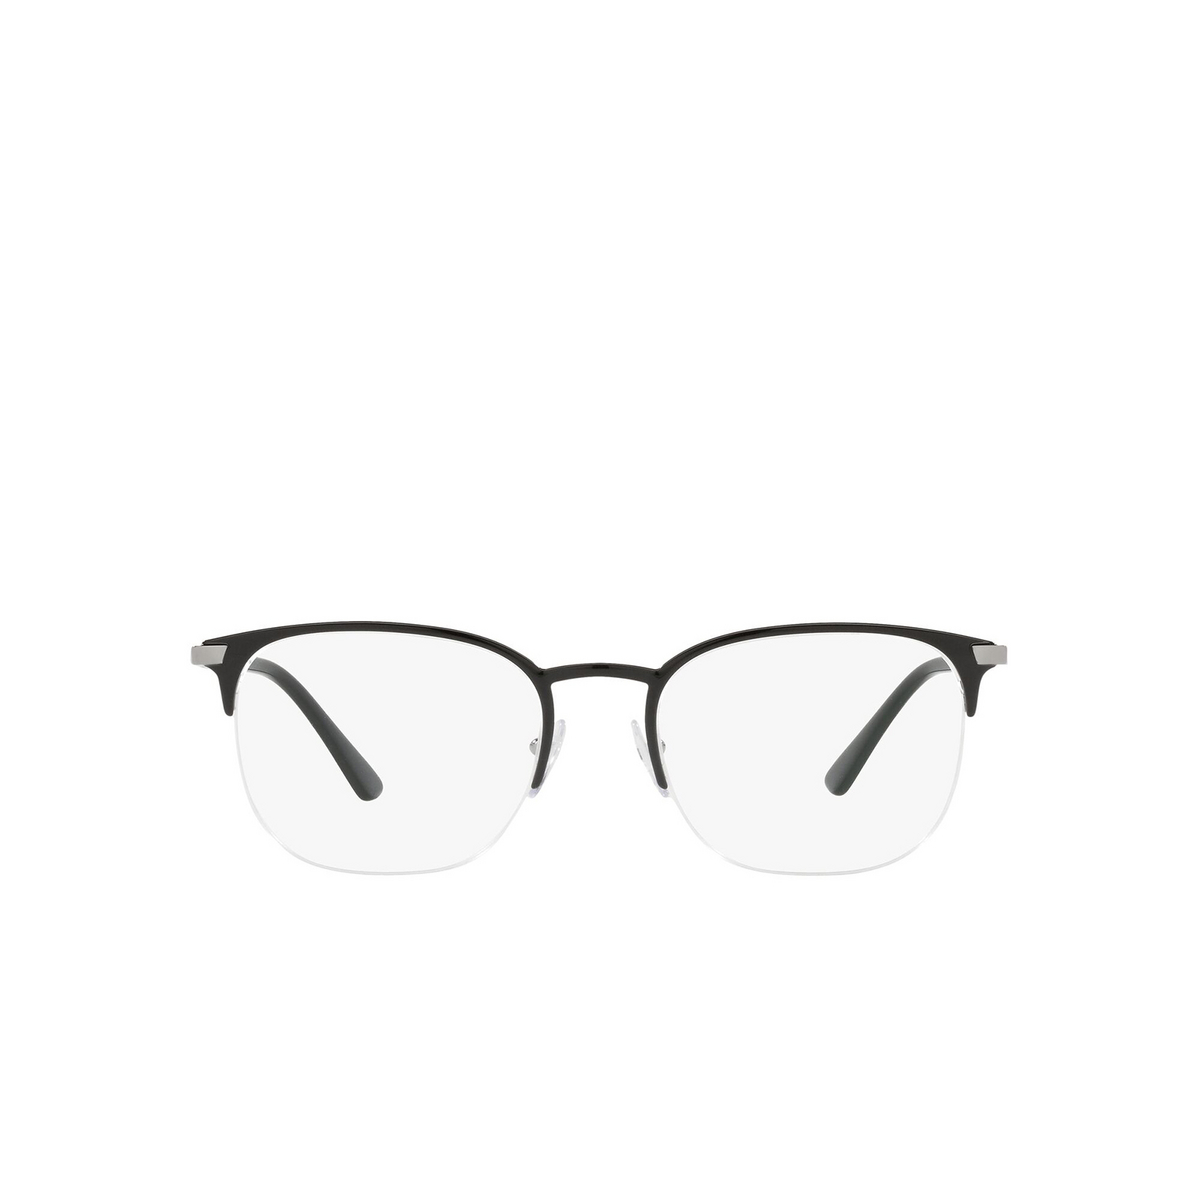 Prada® Oval Eyeglasses: PR 57YV color Black YDC1O1 - front view.